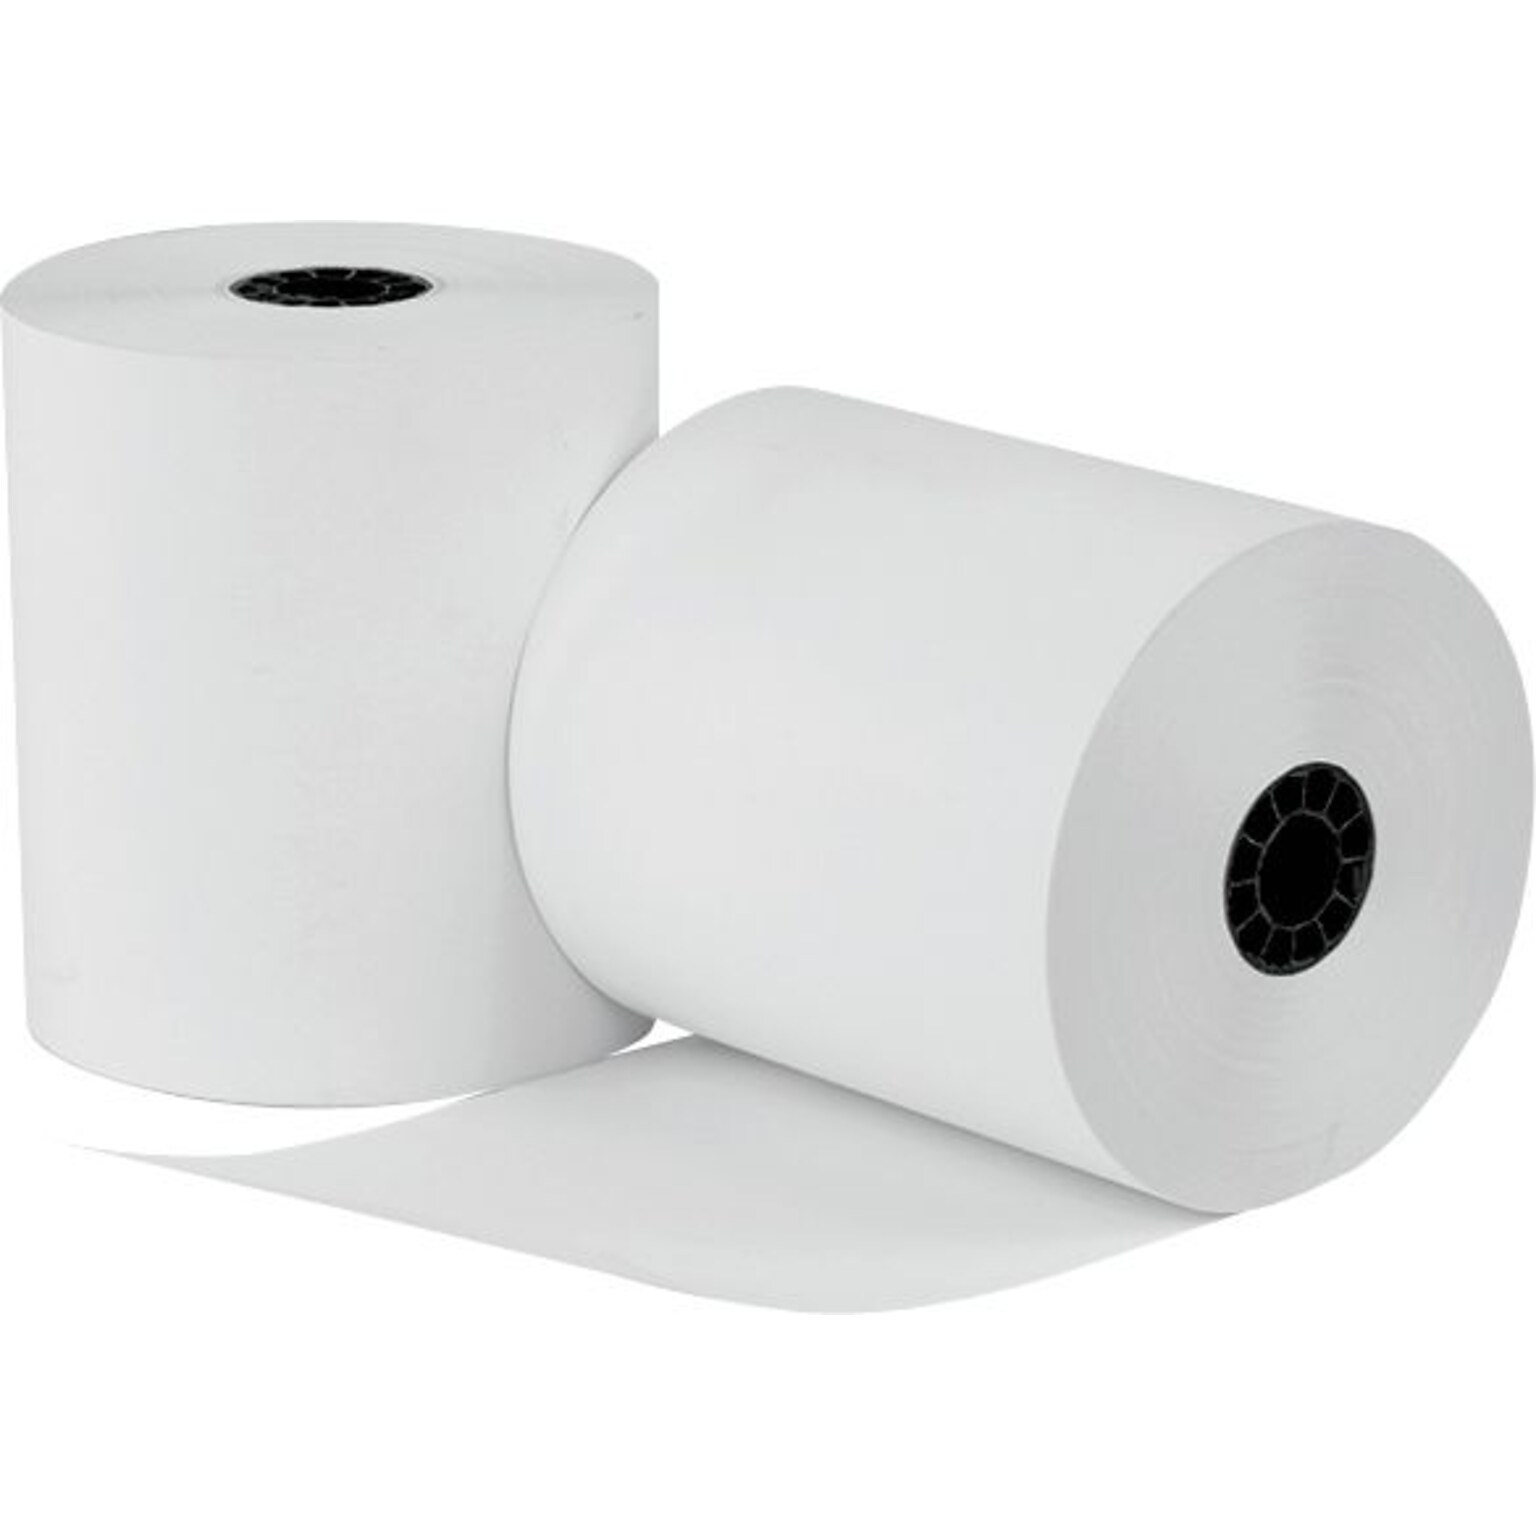 uAccept POS Thermal Paper Rolls, 3 1/8 x 220, 12 Rolls/Pack (MA812)